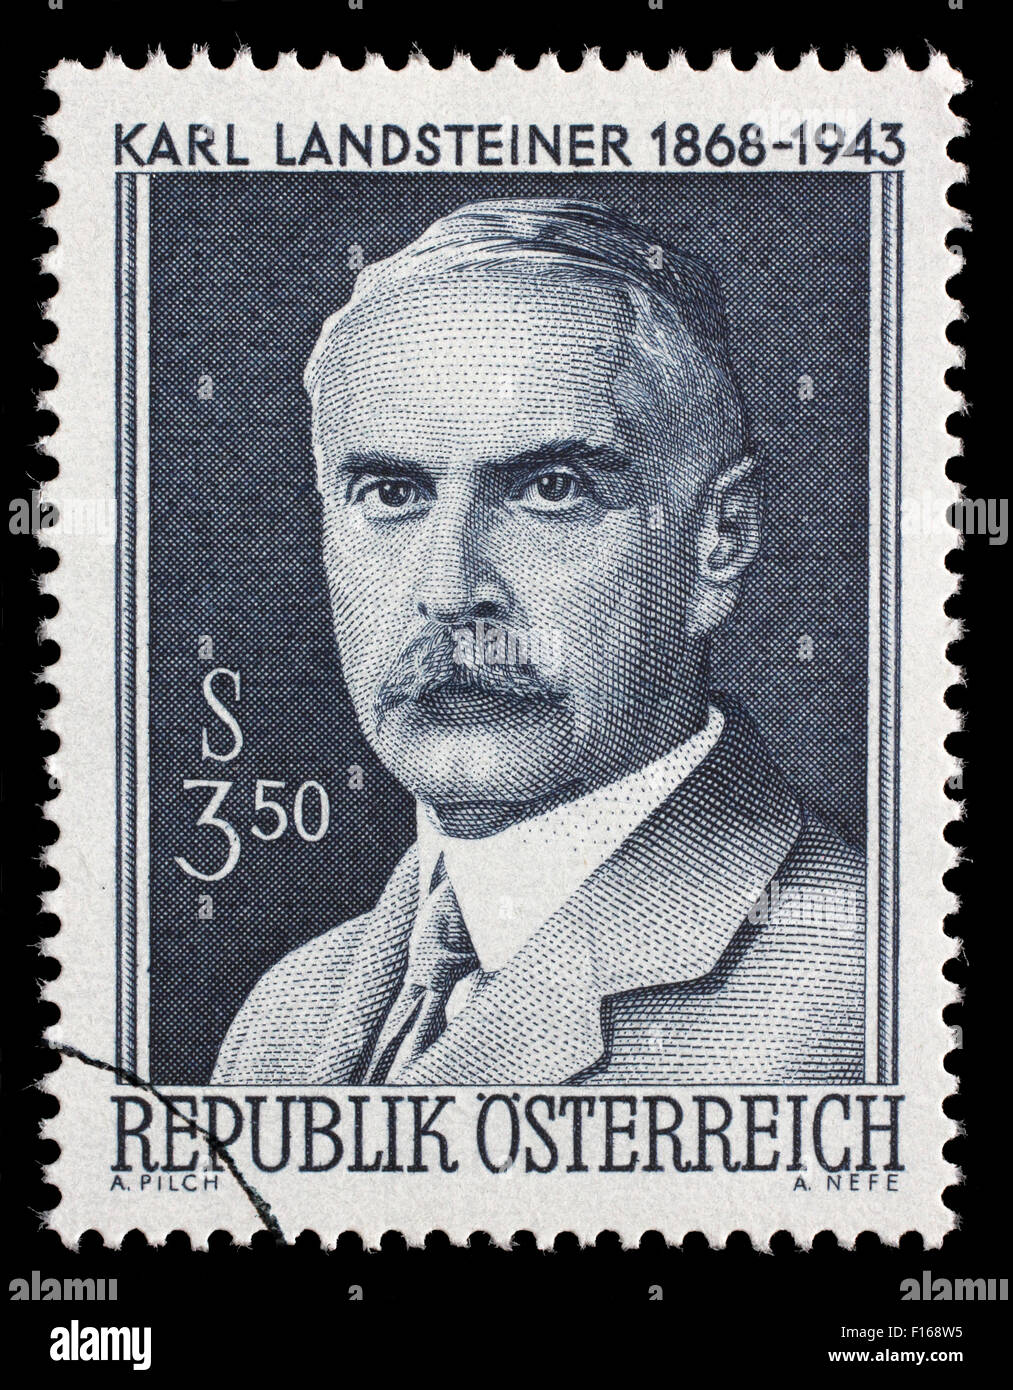 Stamp printed in Austria showing Karl Landsteiner, circa 1968 Stock Photo